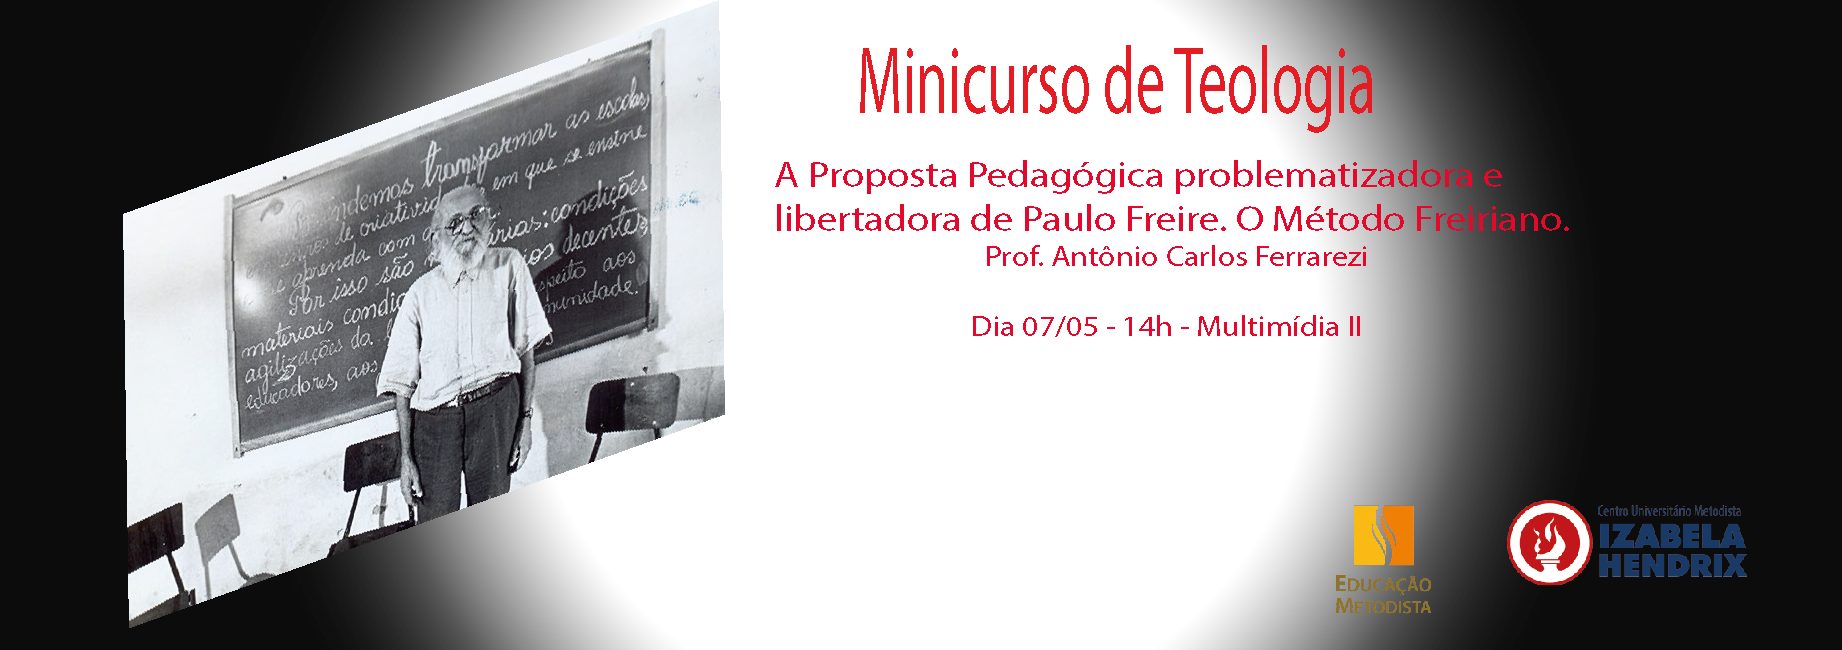 Banner-Minicurso de Teologia5.png